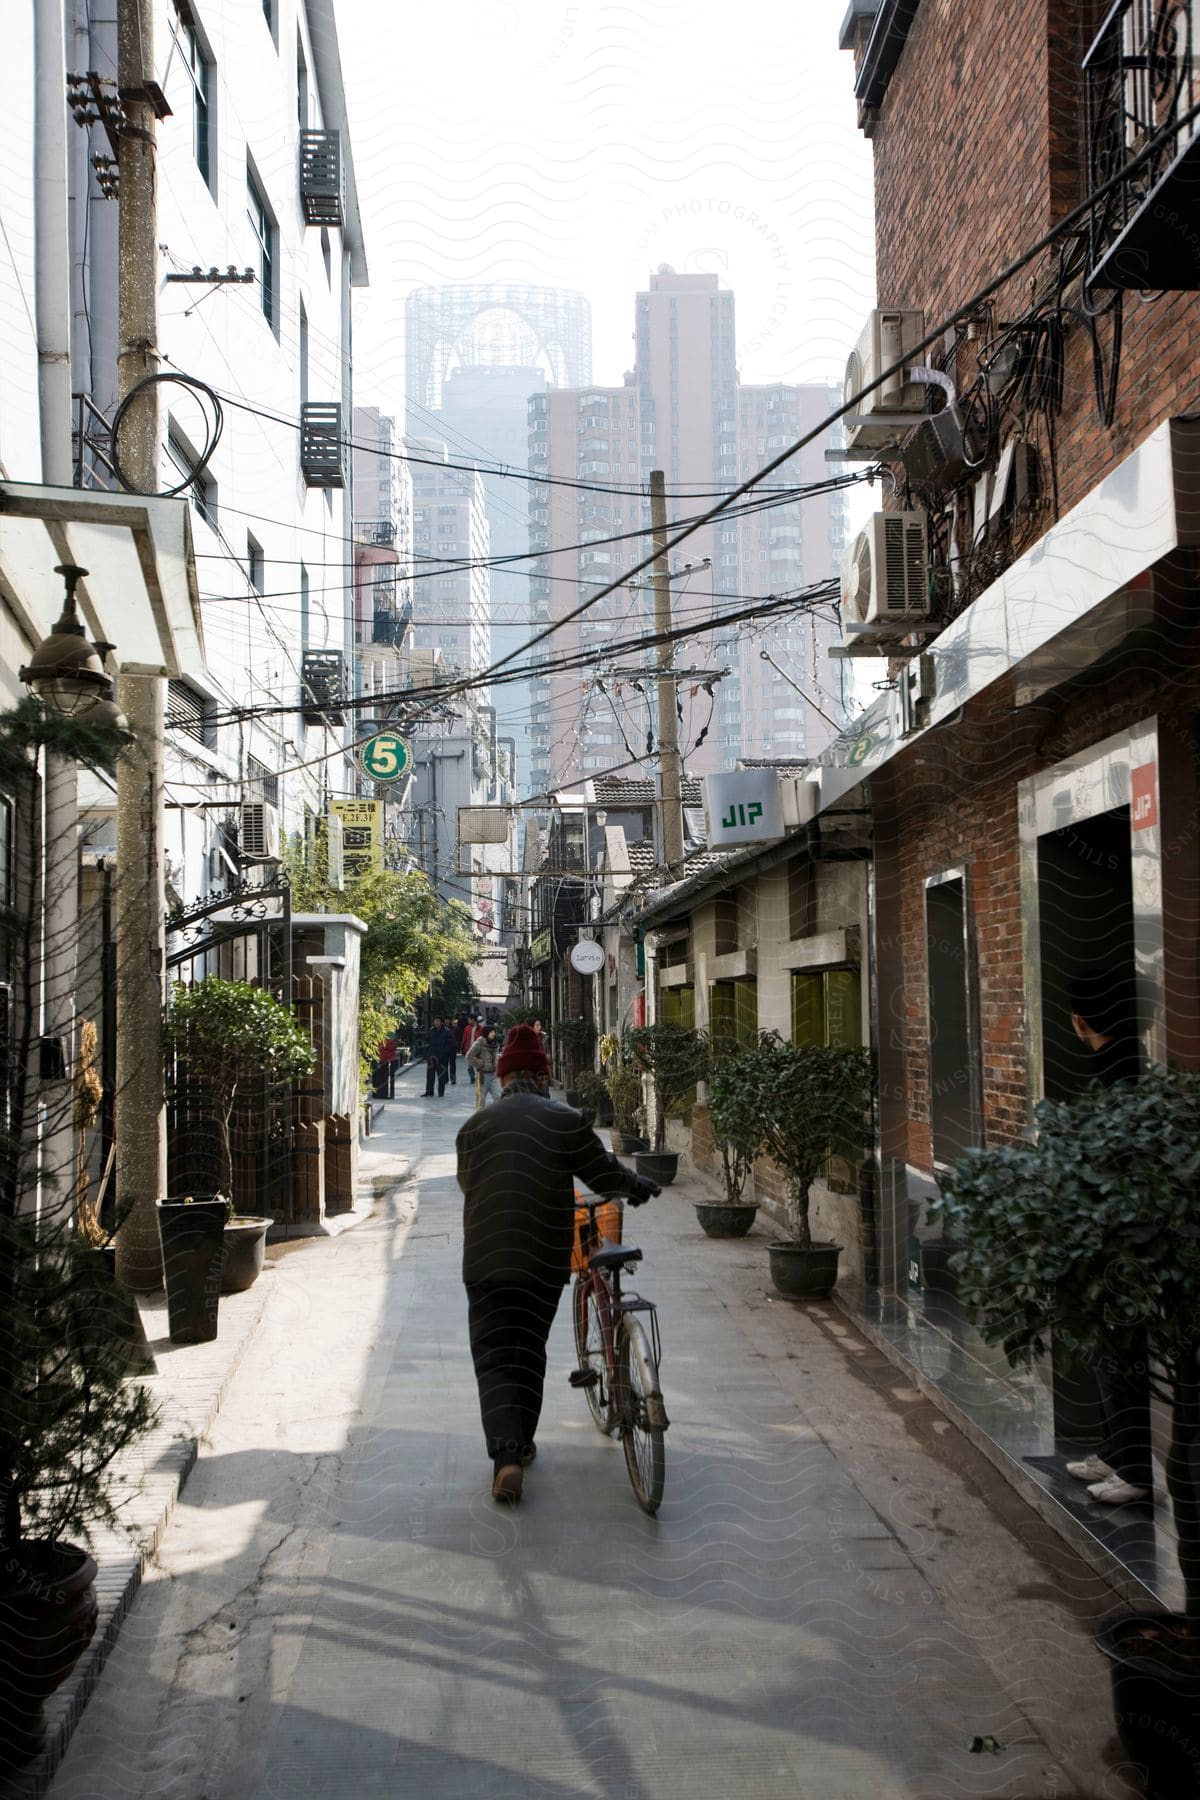 Man pushing bicycle along narrow city alley between apartment buildings